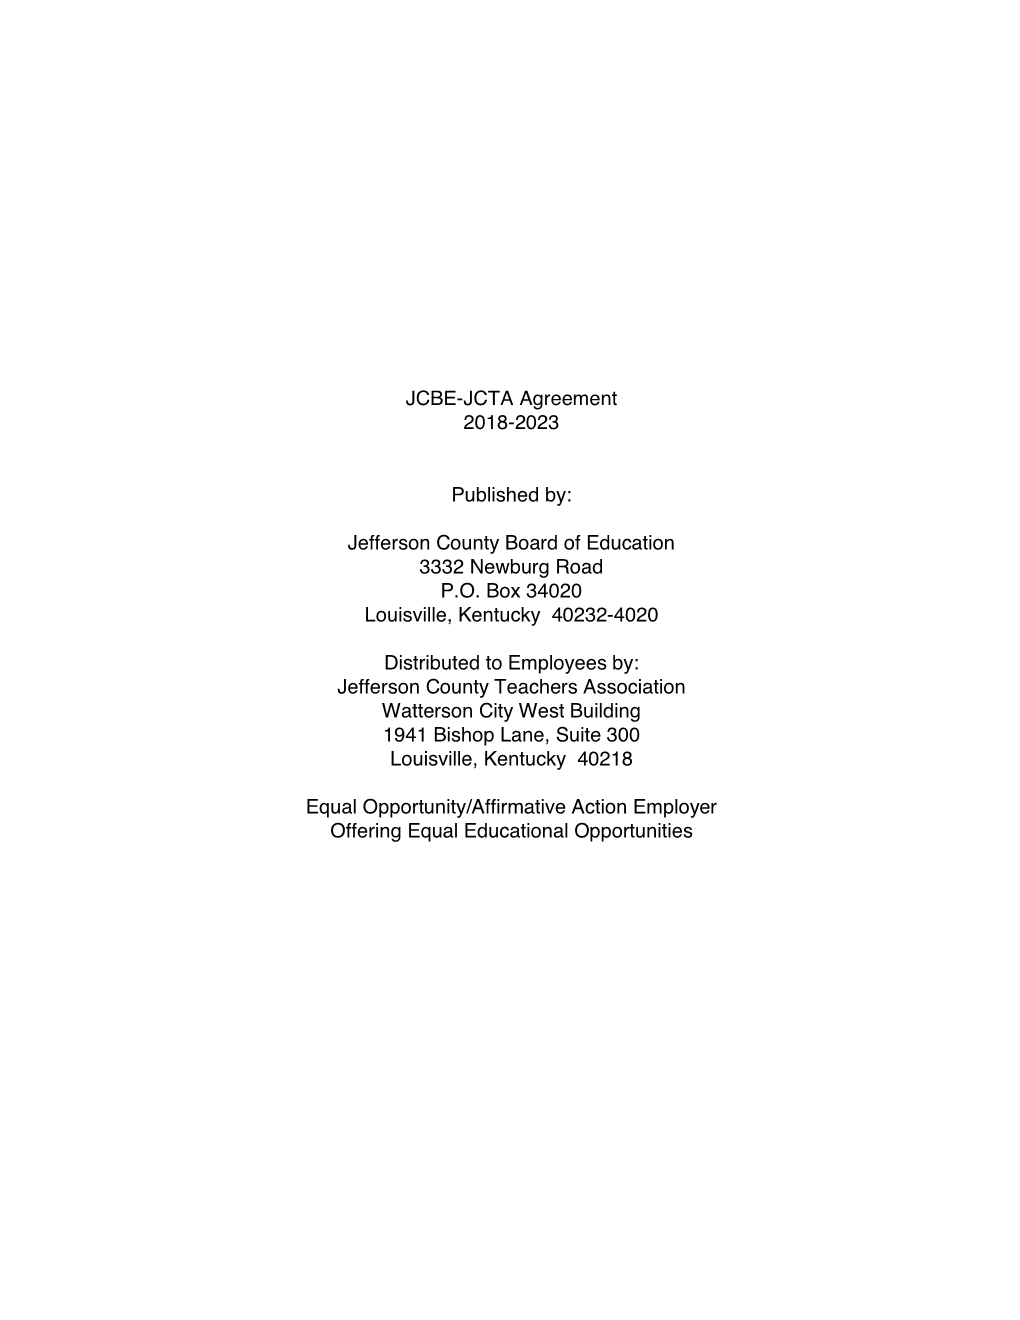 JCBE-JCTA Agreement 2018-2023 Published By: Jefferson County